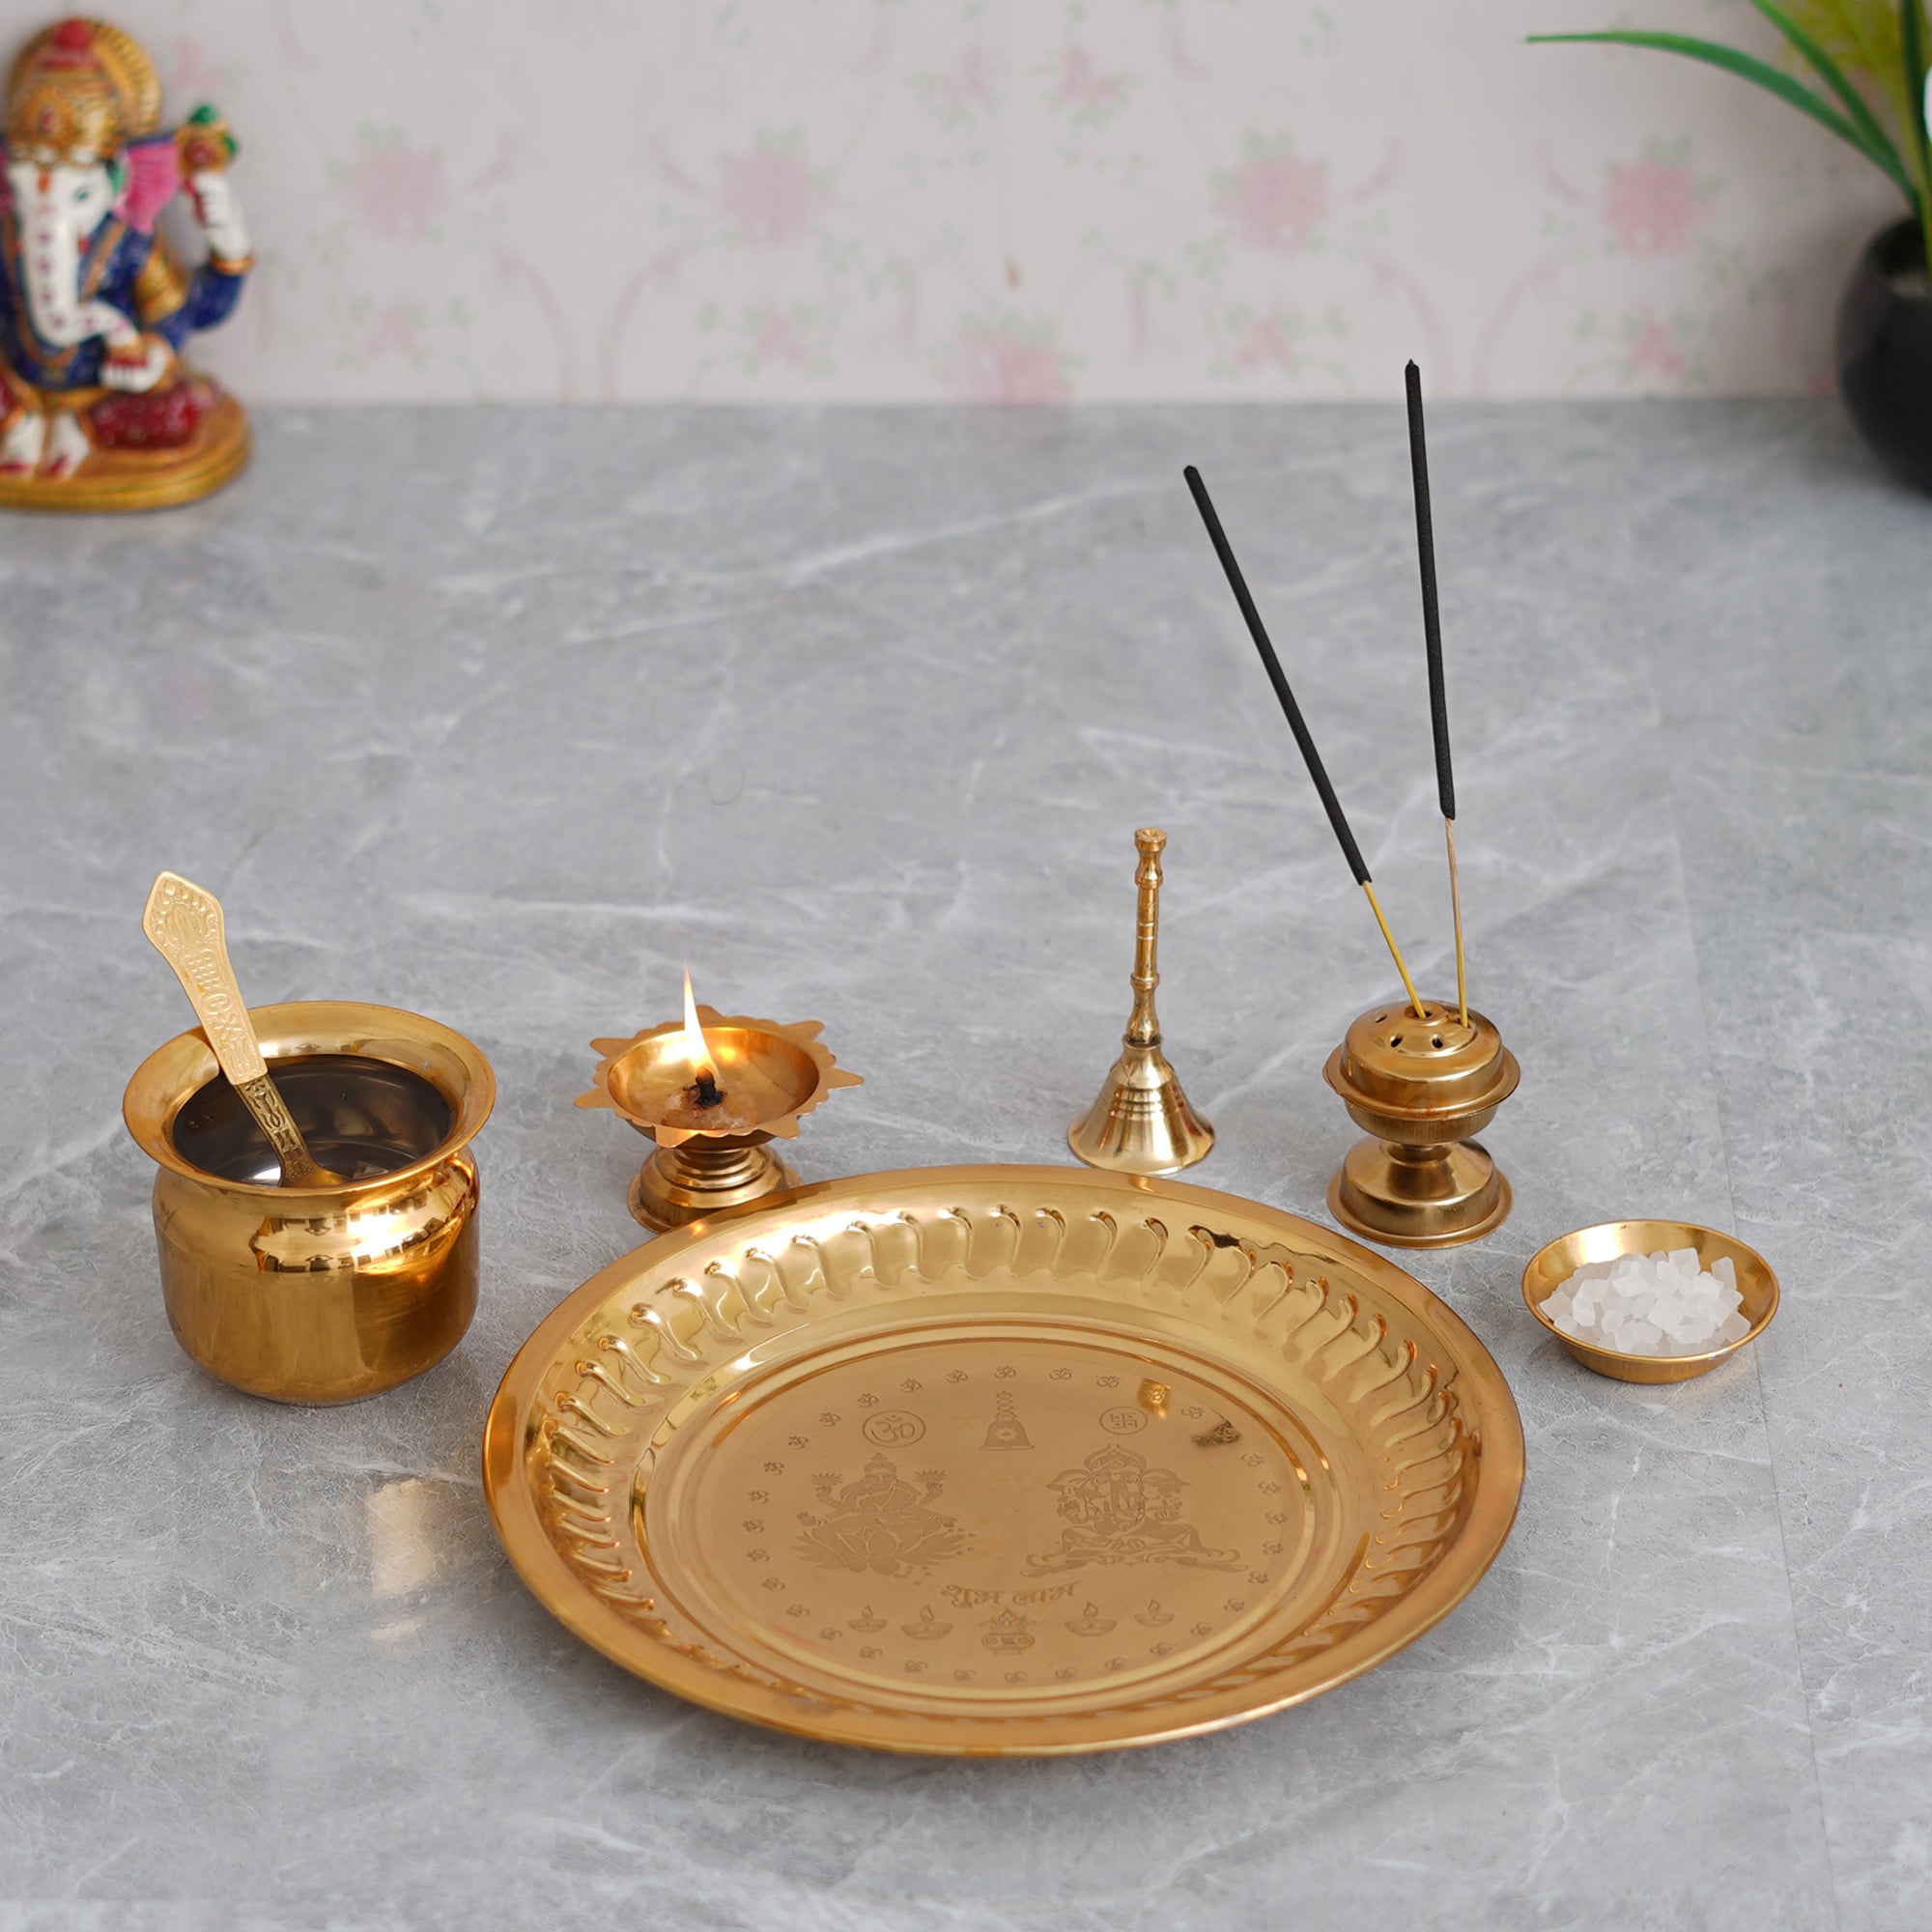 eCraftIndia Golden Metal Handcrafted Lakshmi Ganesha Design Pooja Thali Set with Diya, Ghanti, Kalash, Spoon, Bowl, Agarbatti Stand